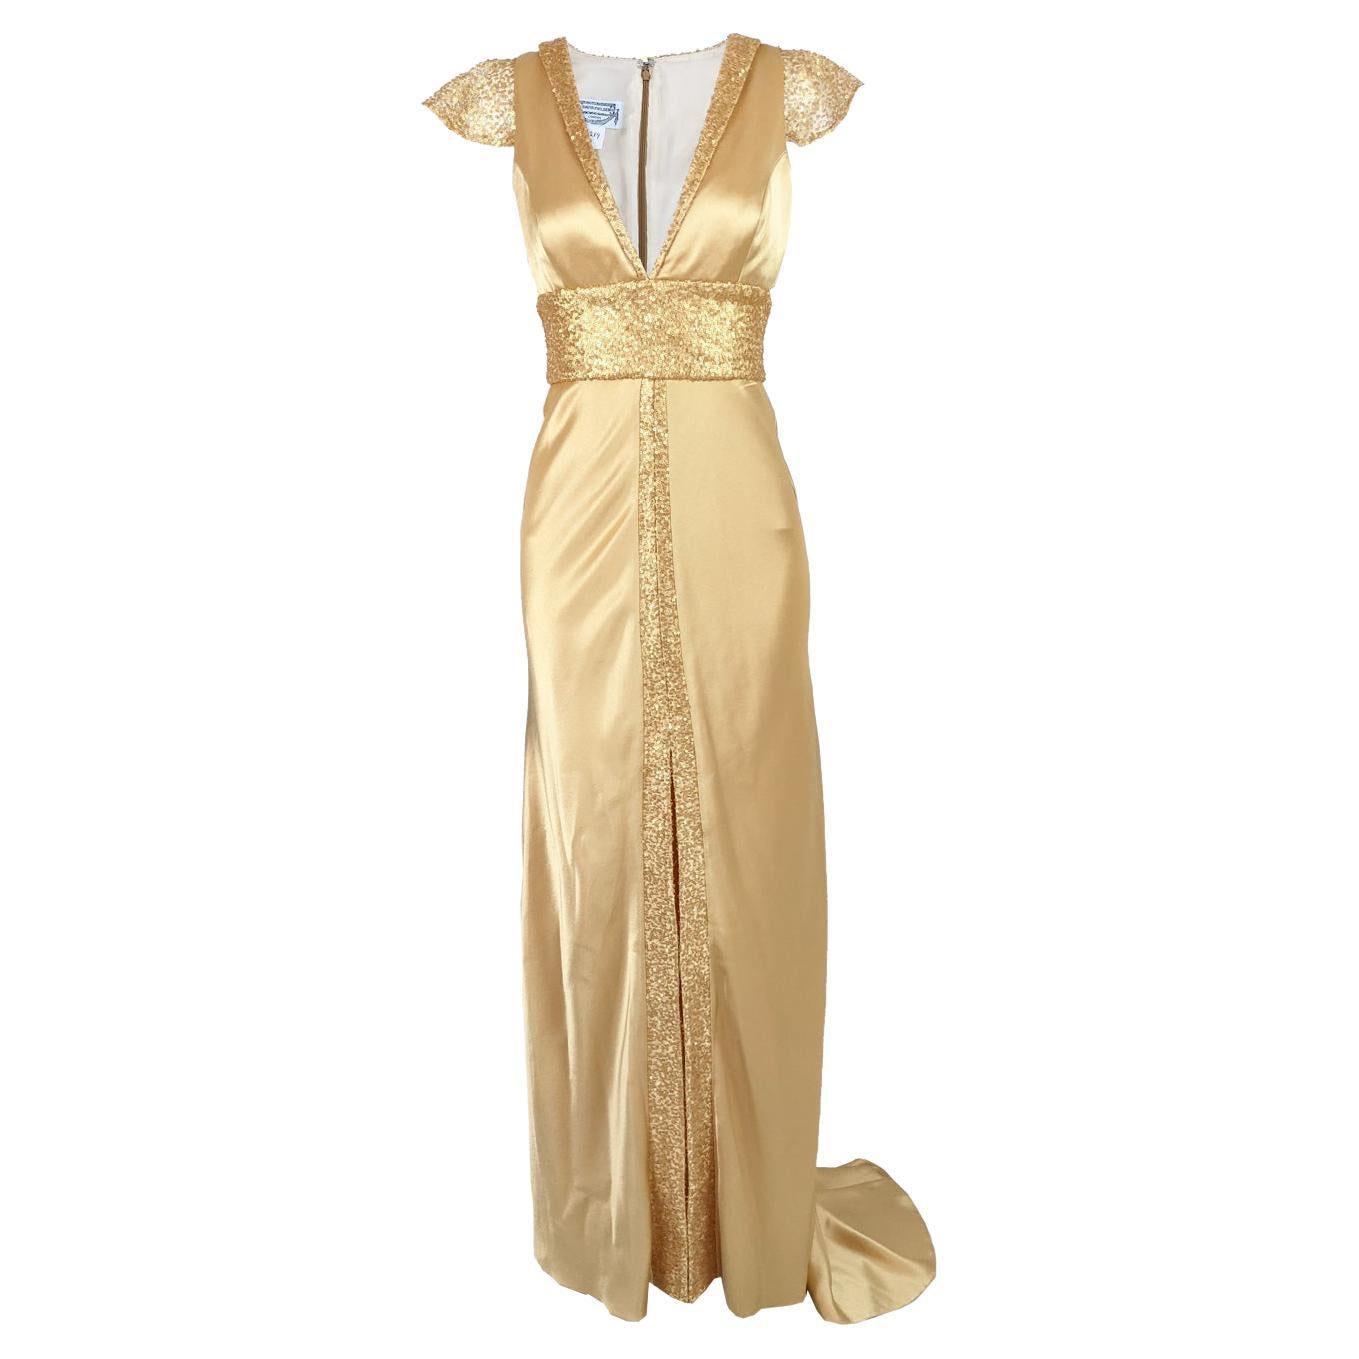 David Fielden Gold Silk Satin & Sequin Floor Length Evening Gown, 1990s